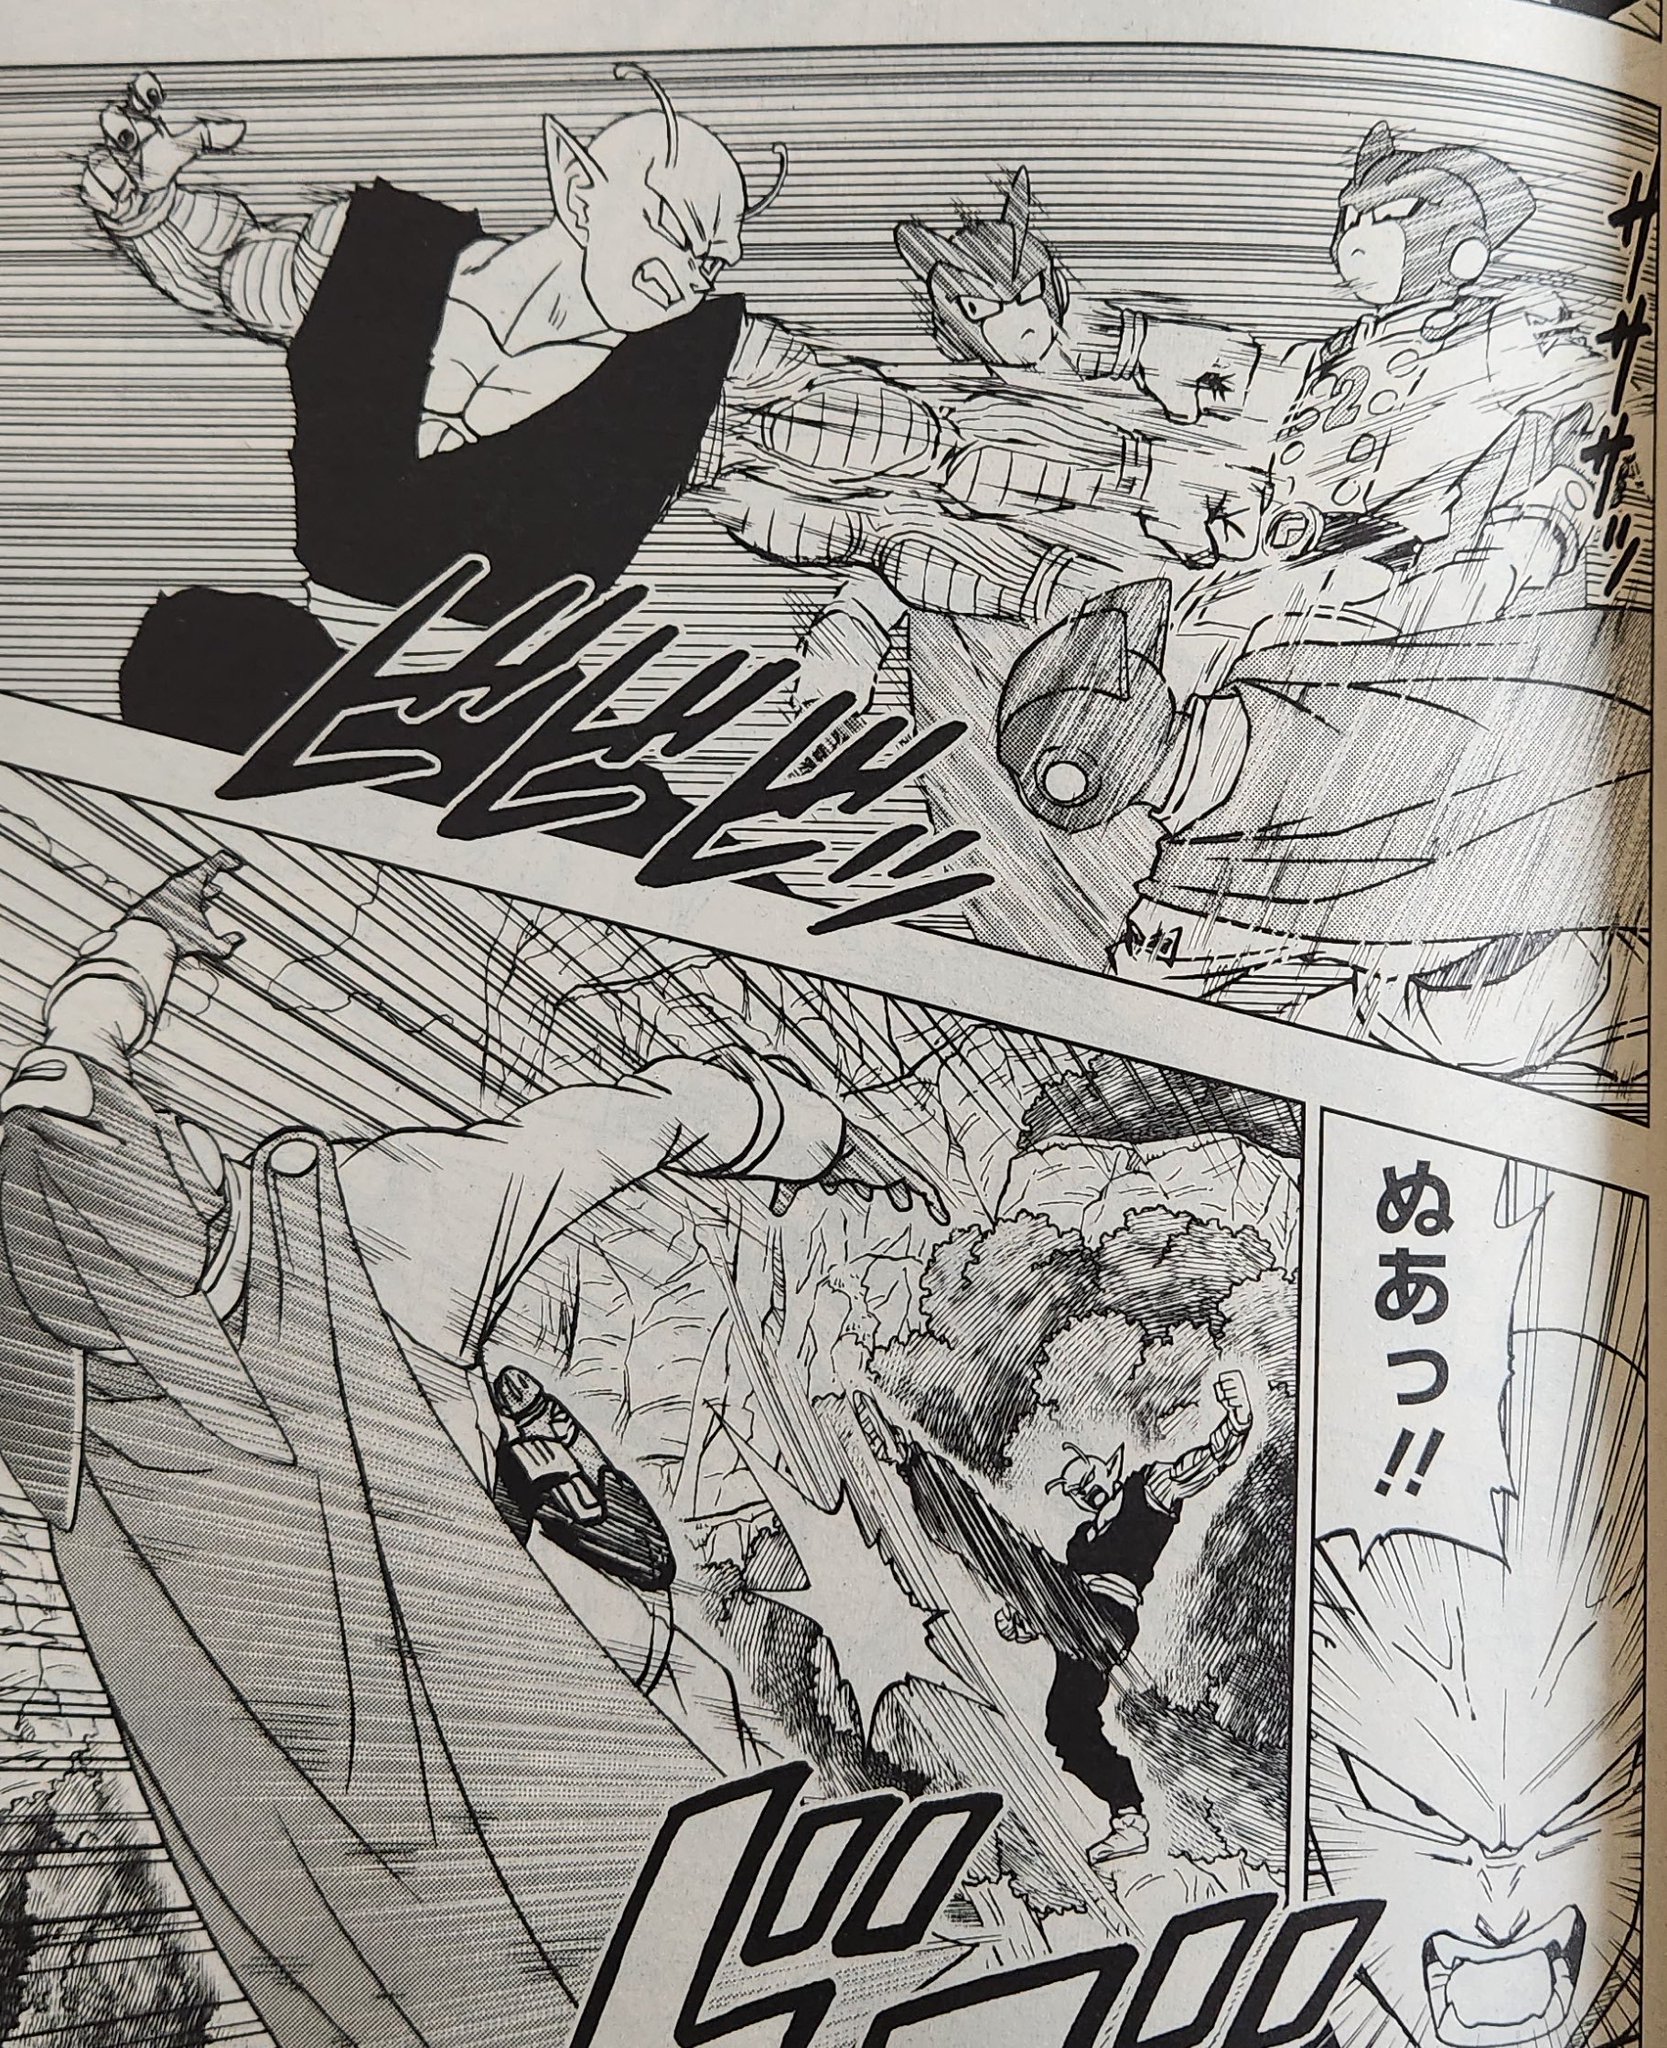 Daiko O Saiyajin on X: SAIU! Imagens do capítulo 92 do mangá de